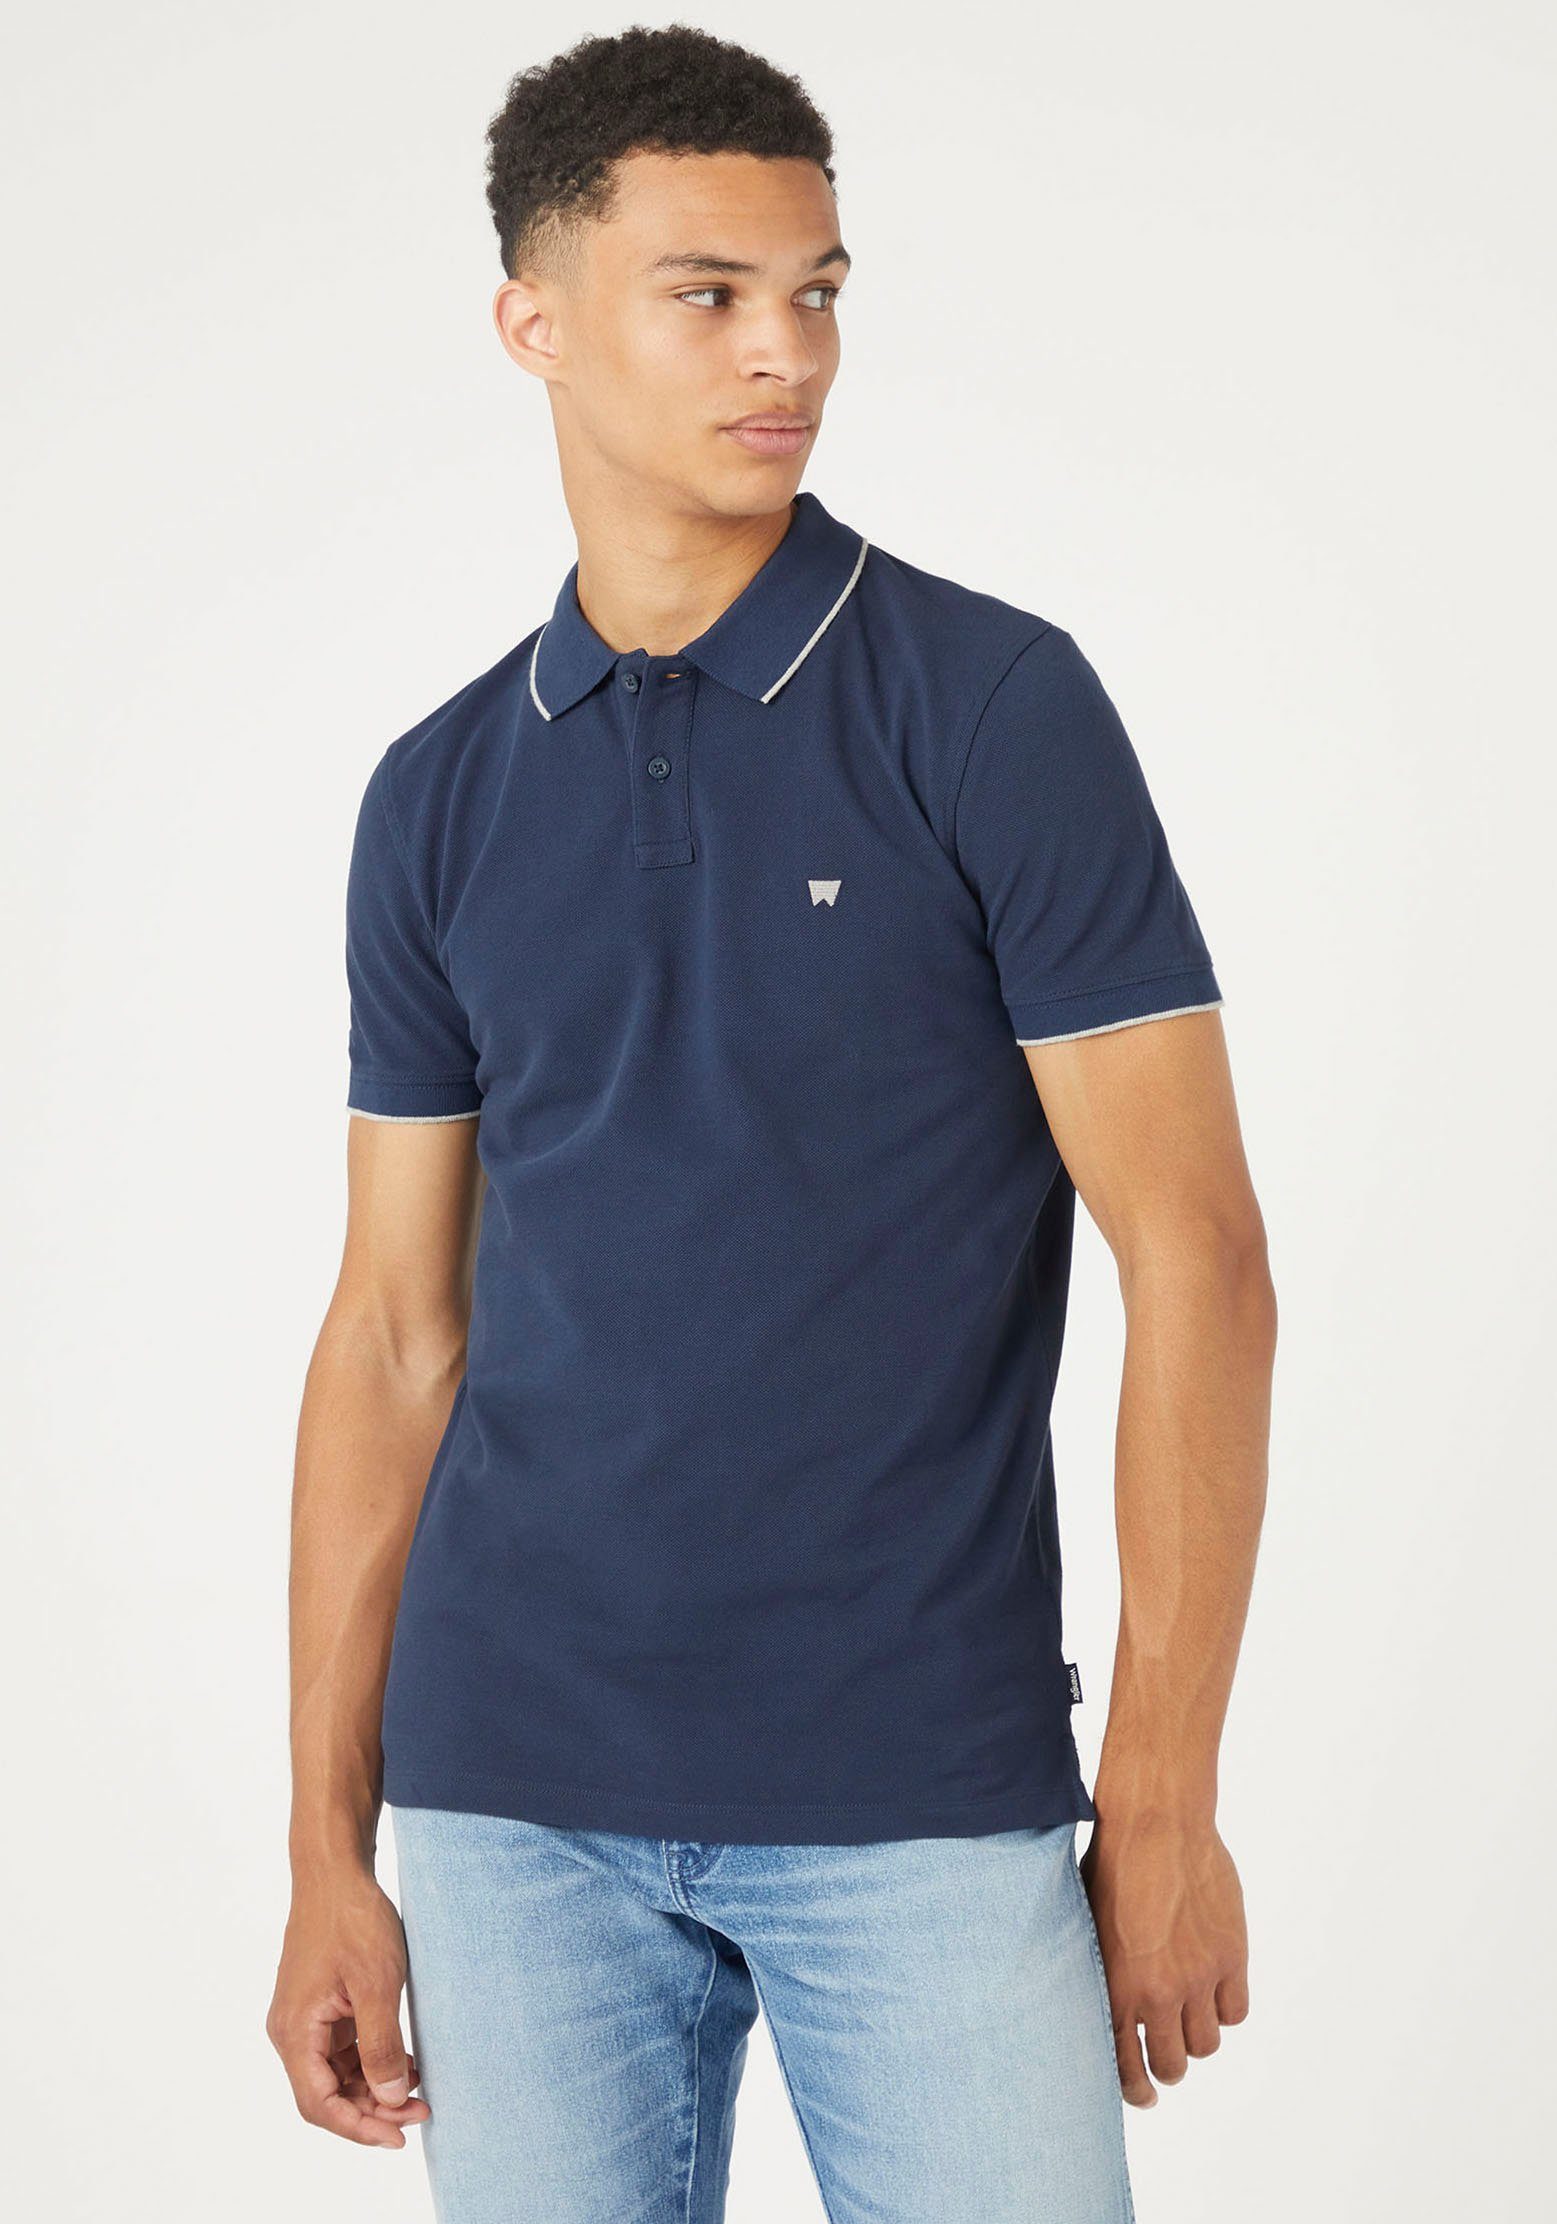 Wrangler Poloshirt navy | T-Shirts